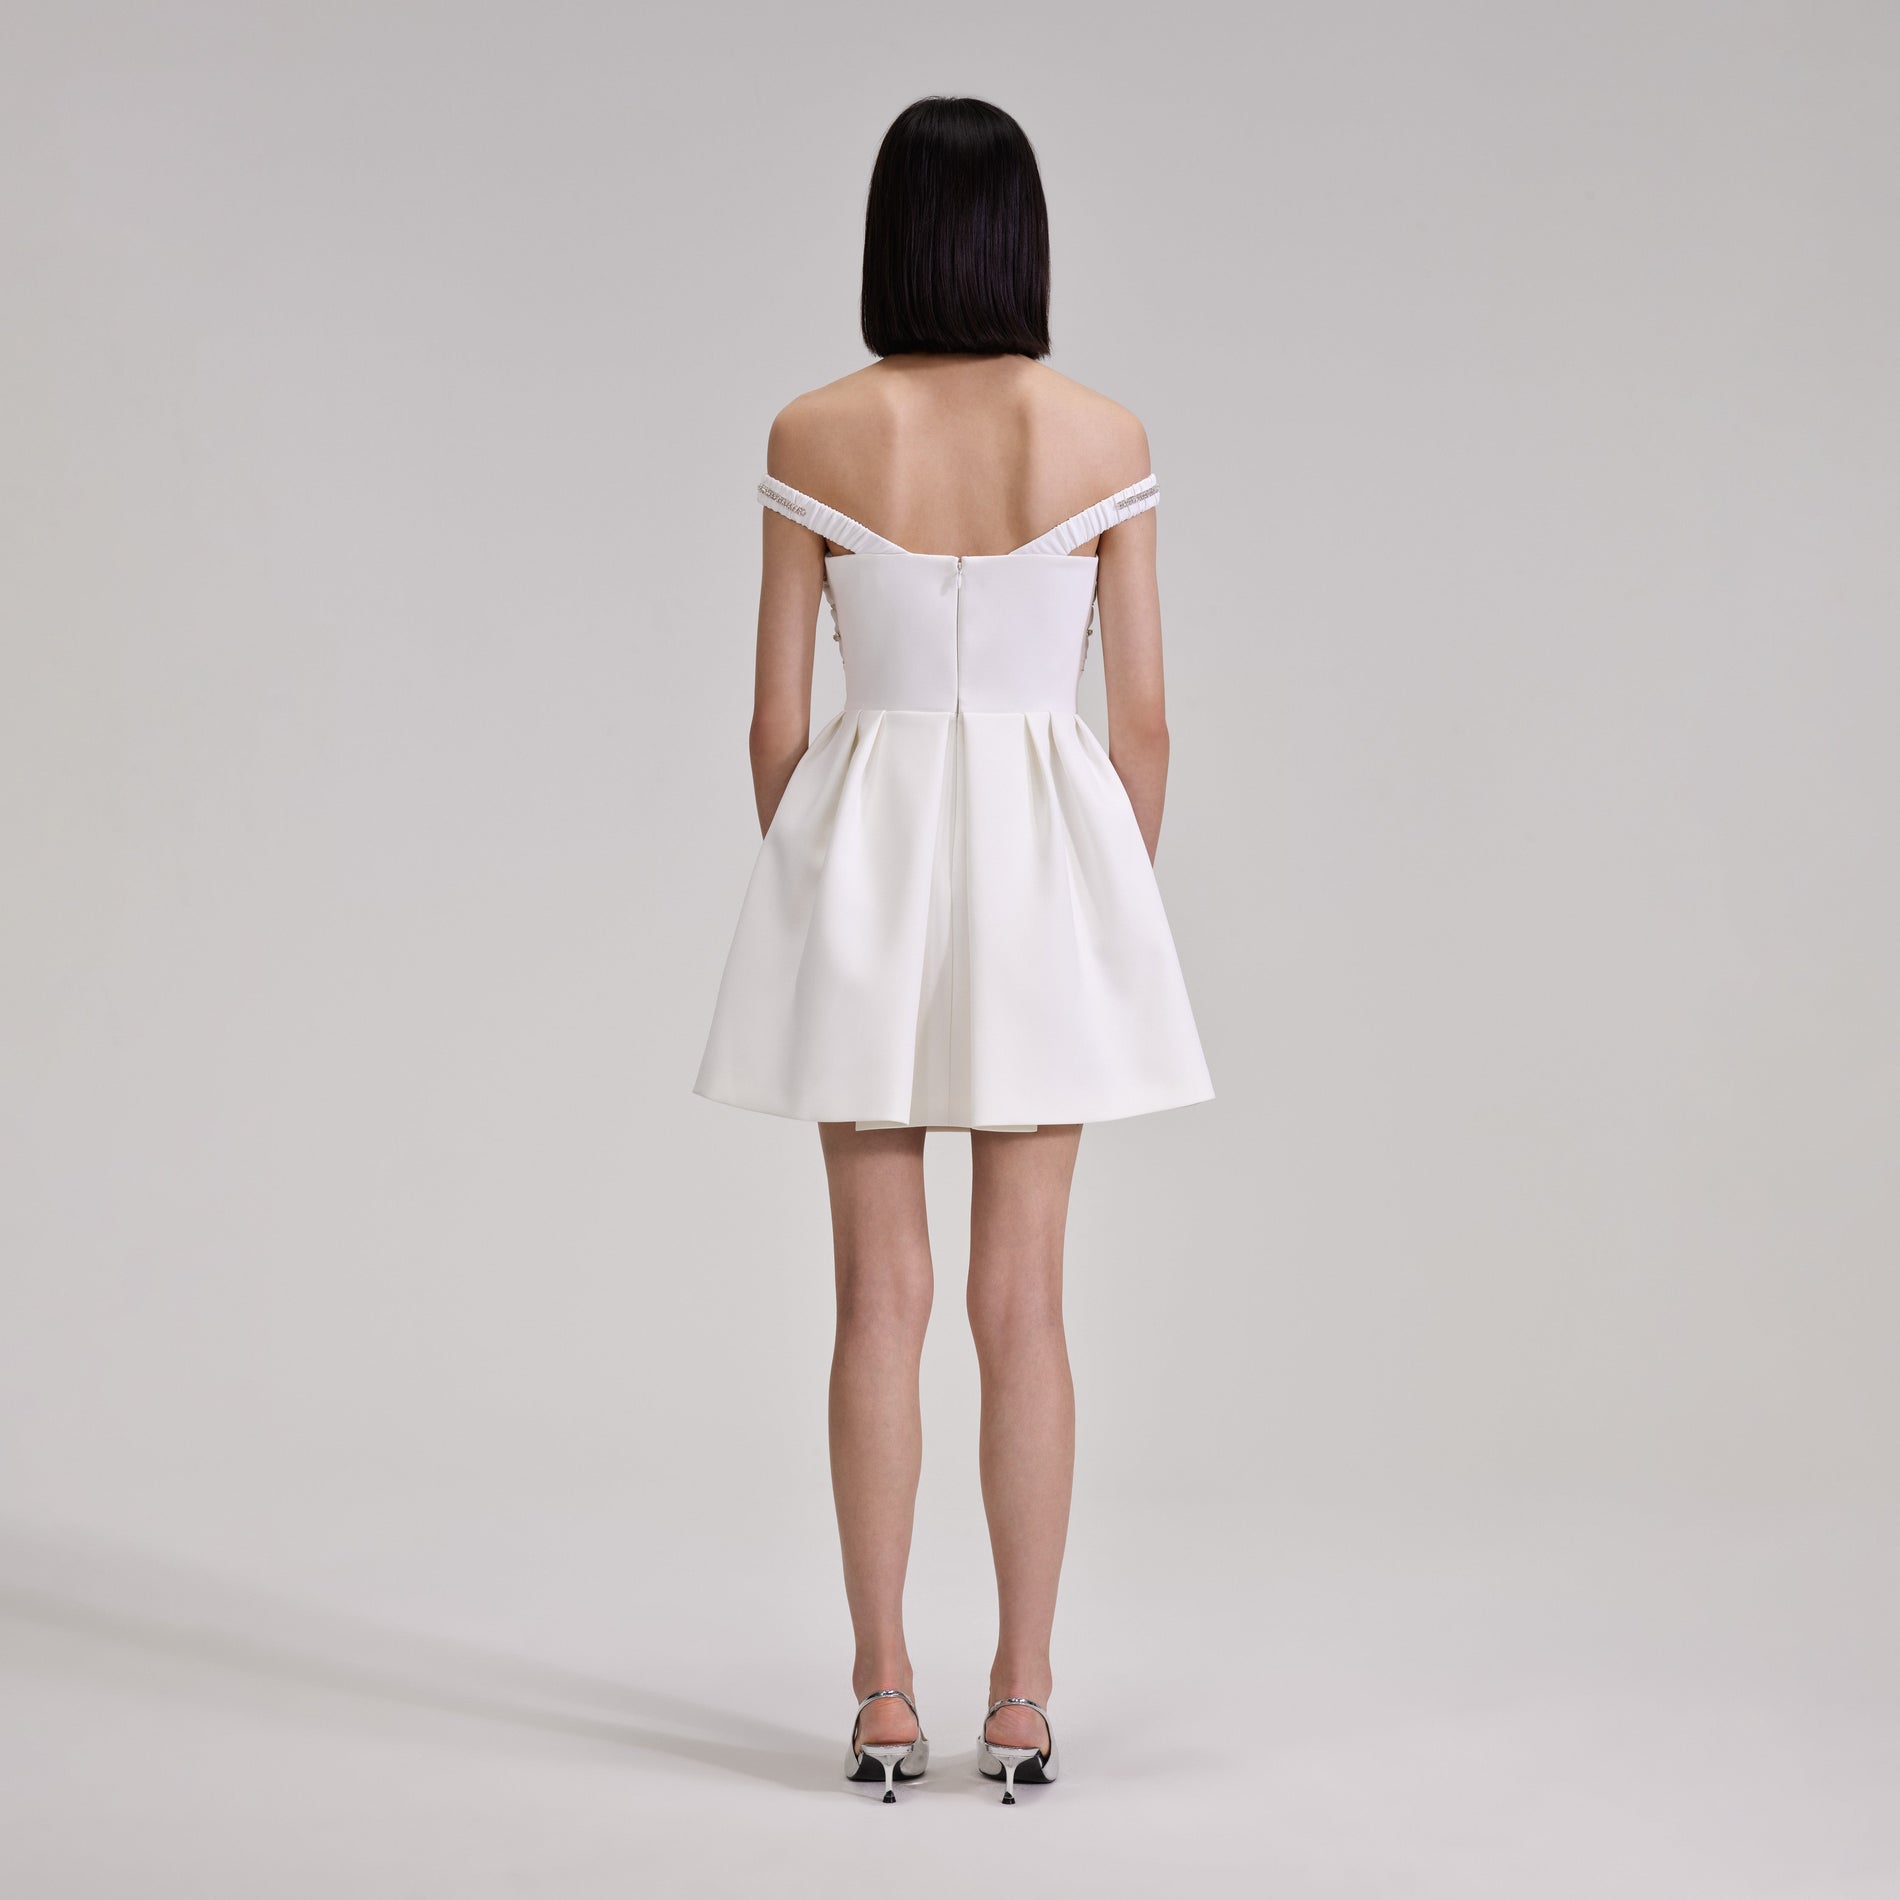 A woman wearing the White Diamante Bust Mini Dress